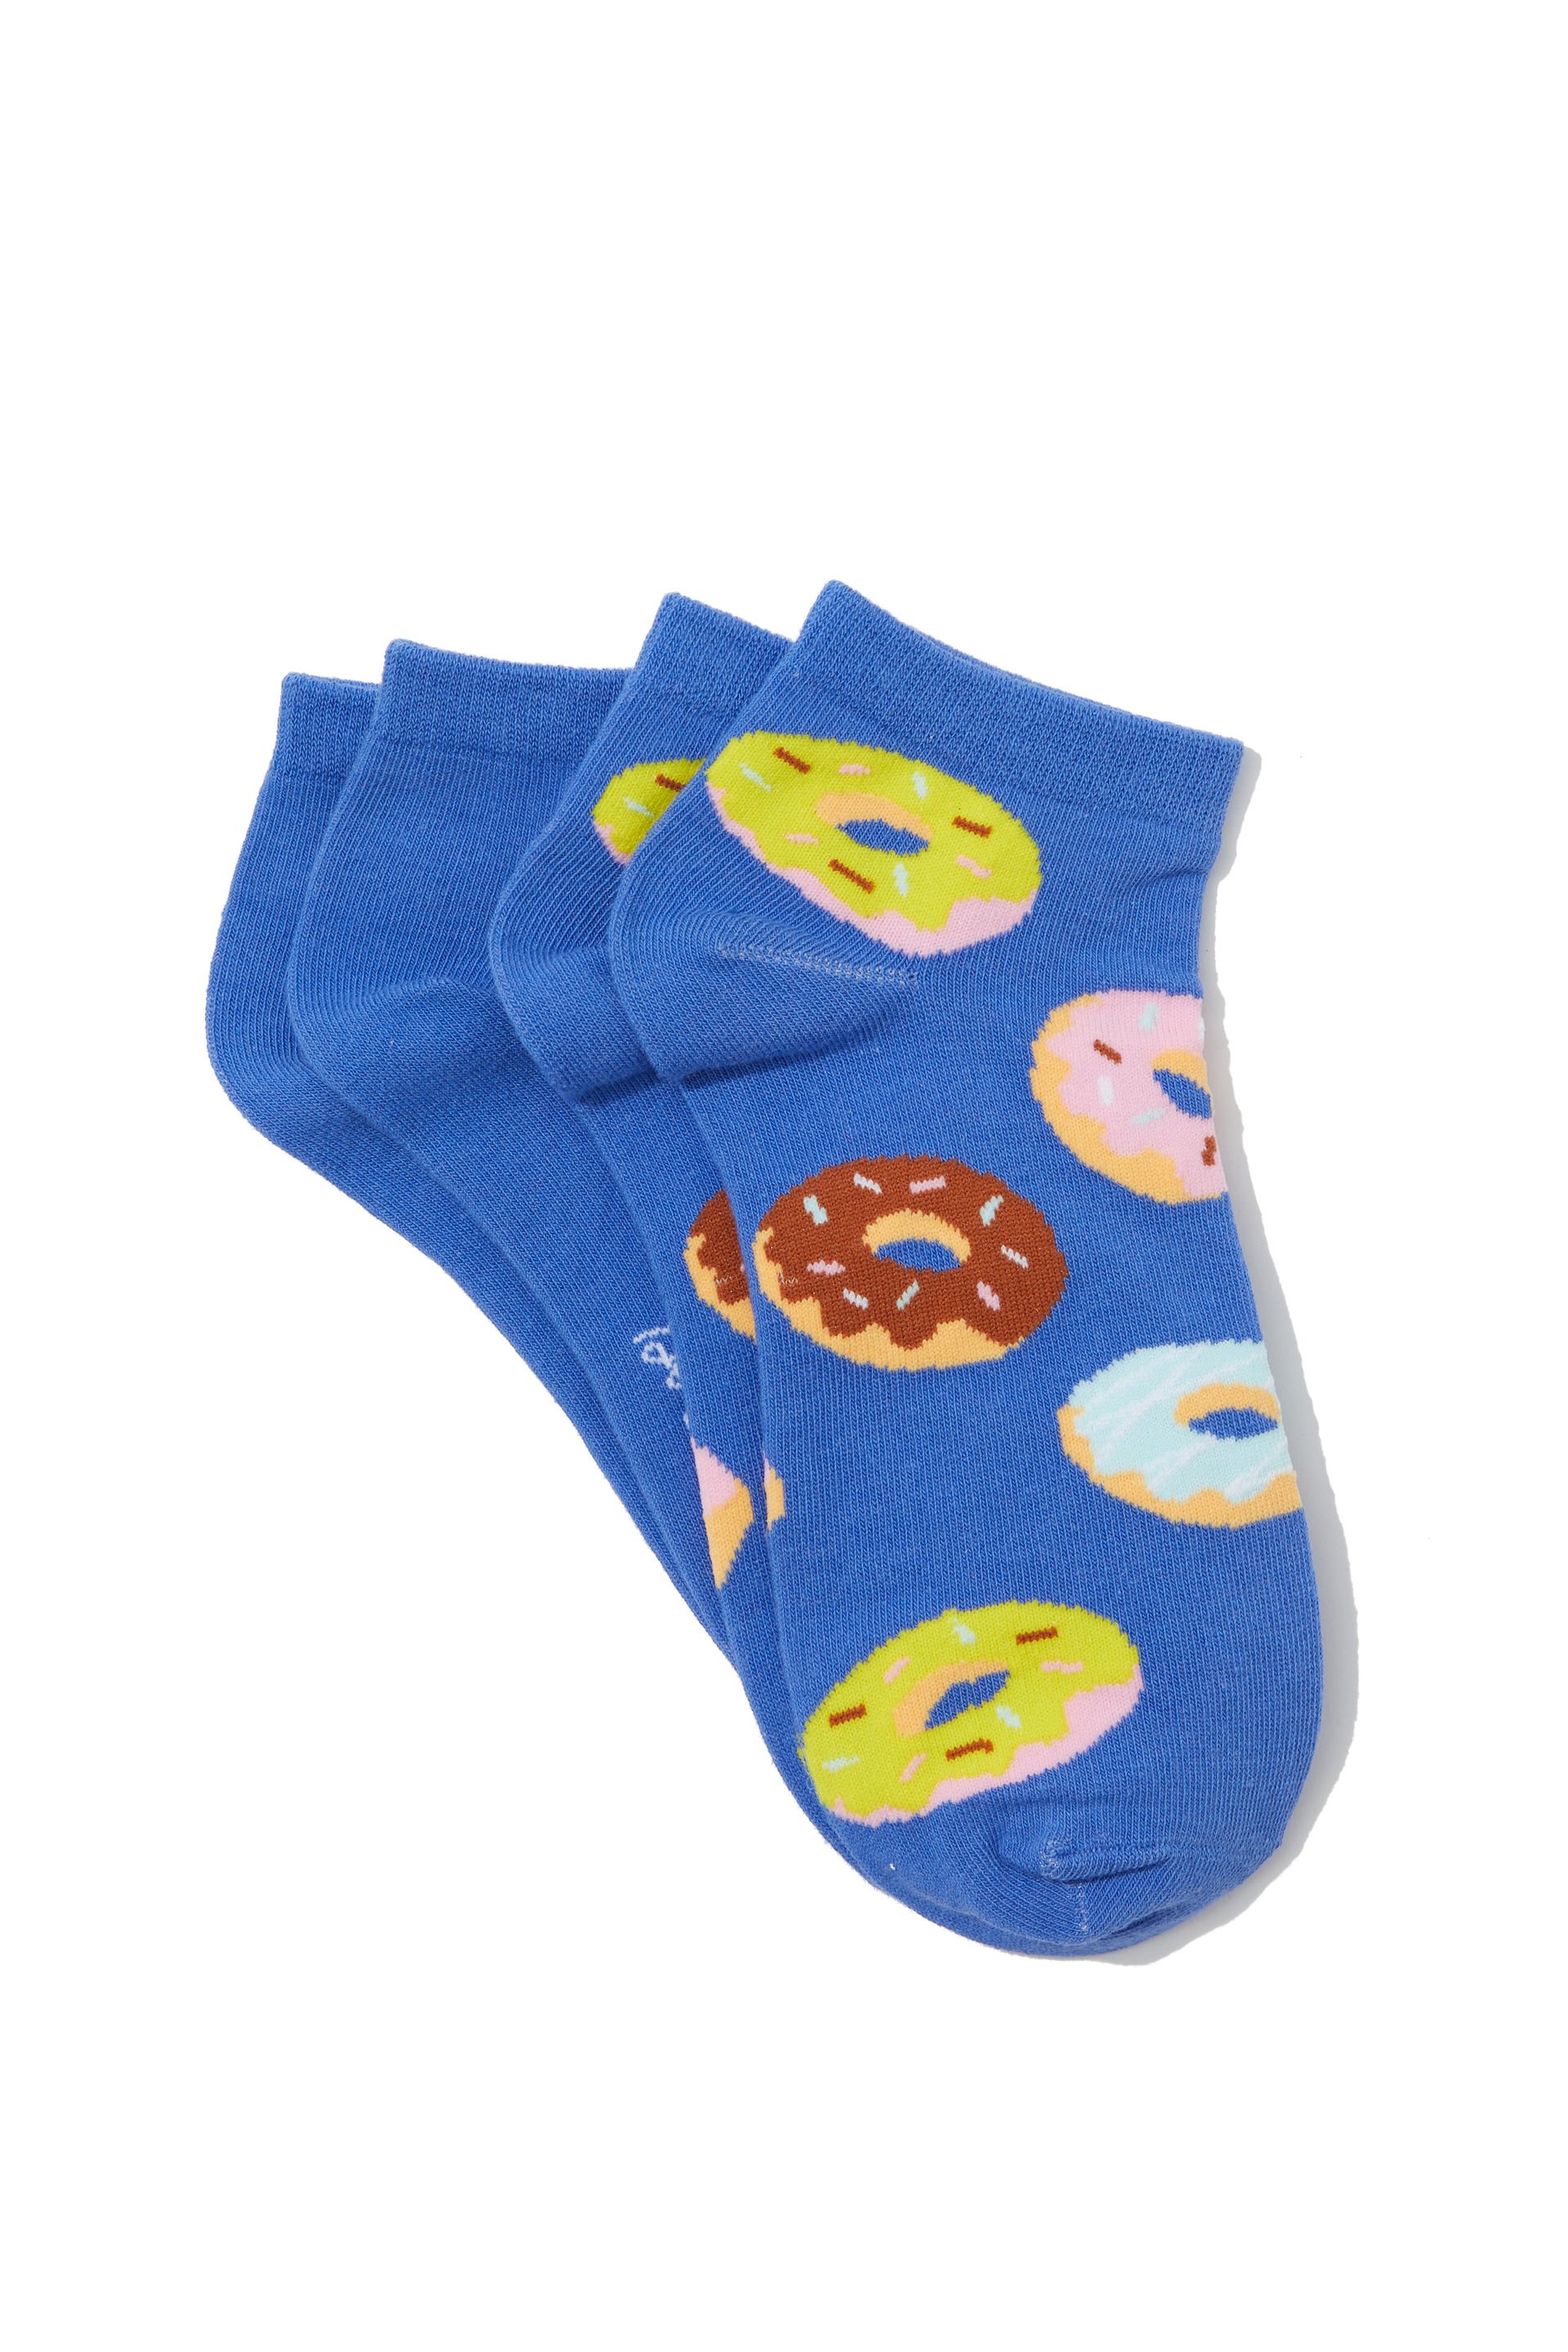 Typo - 2 Pk Of Ankle Socks - Donuts blue ydg (m/l)